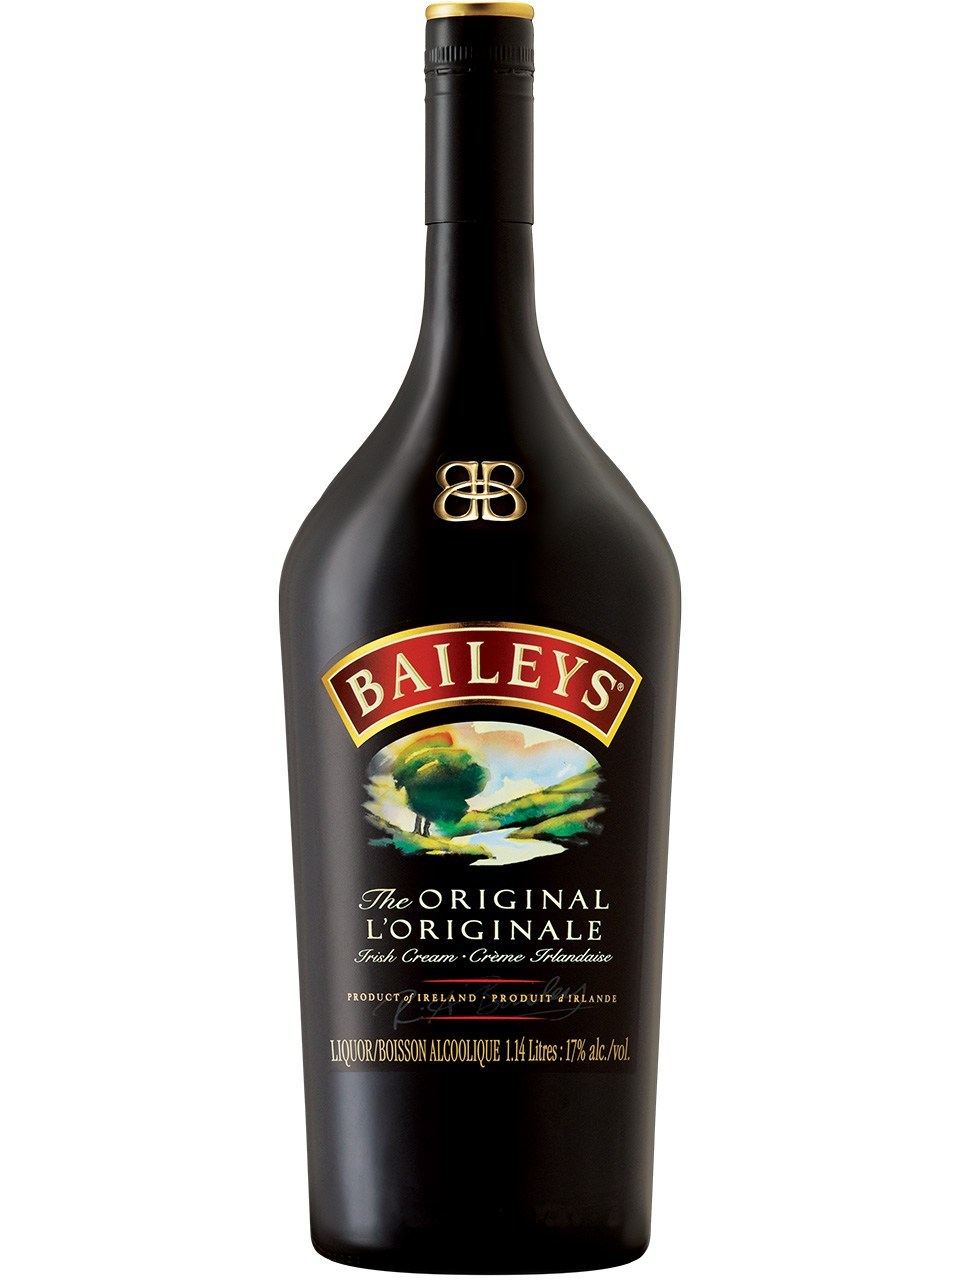 Rượu Baileys